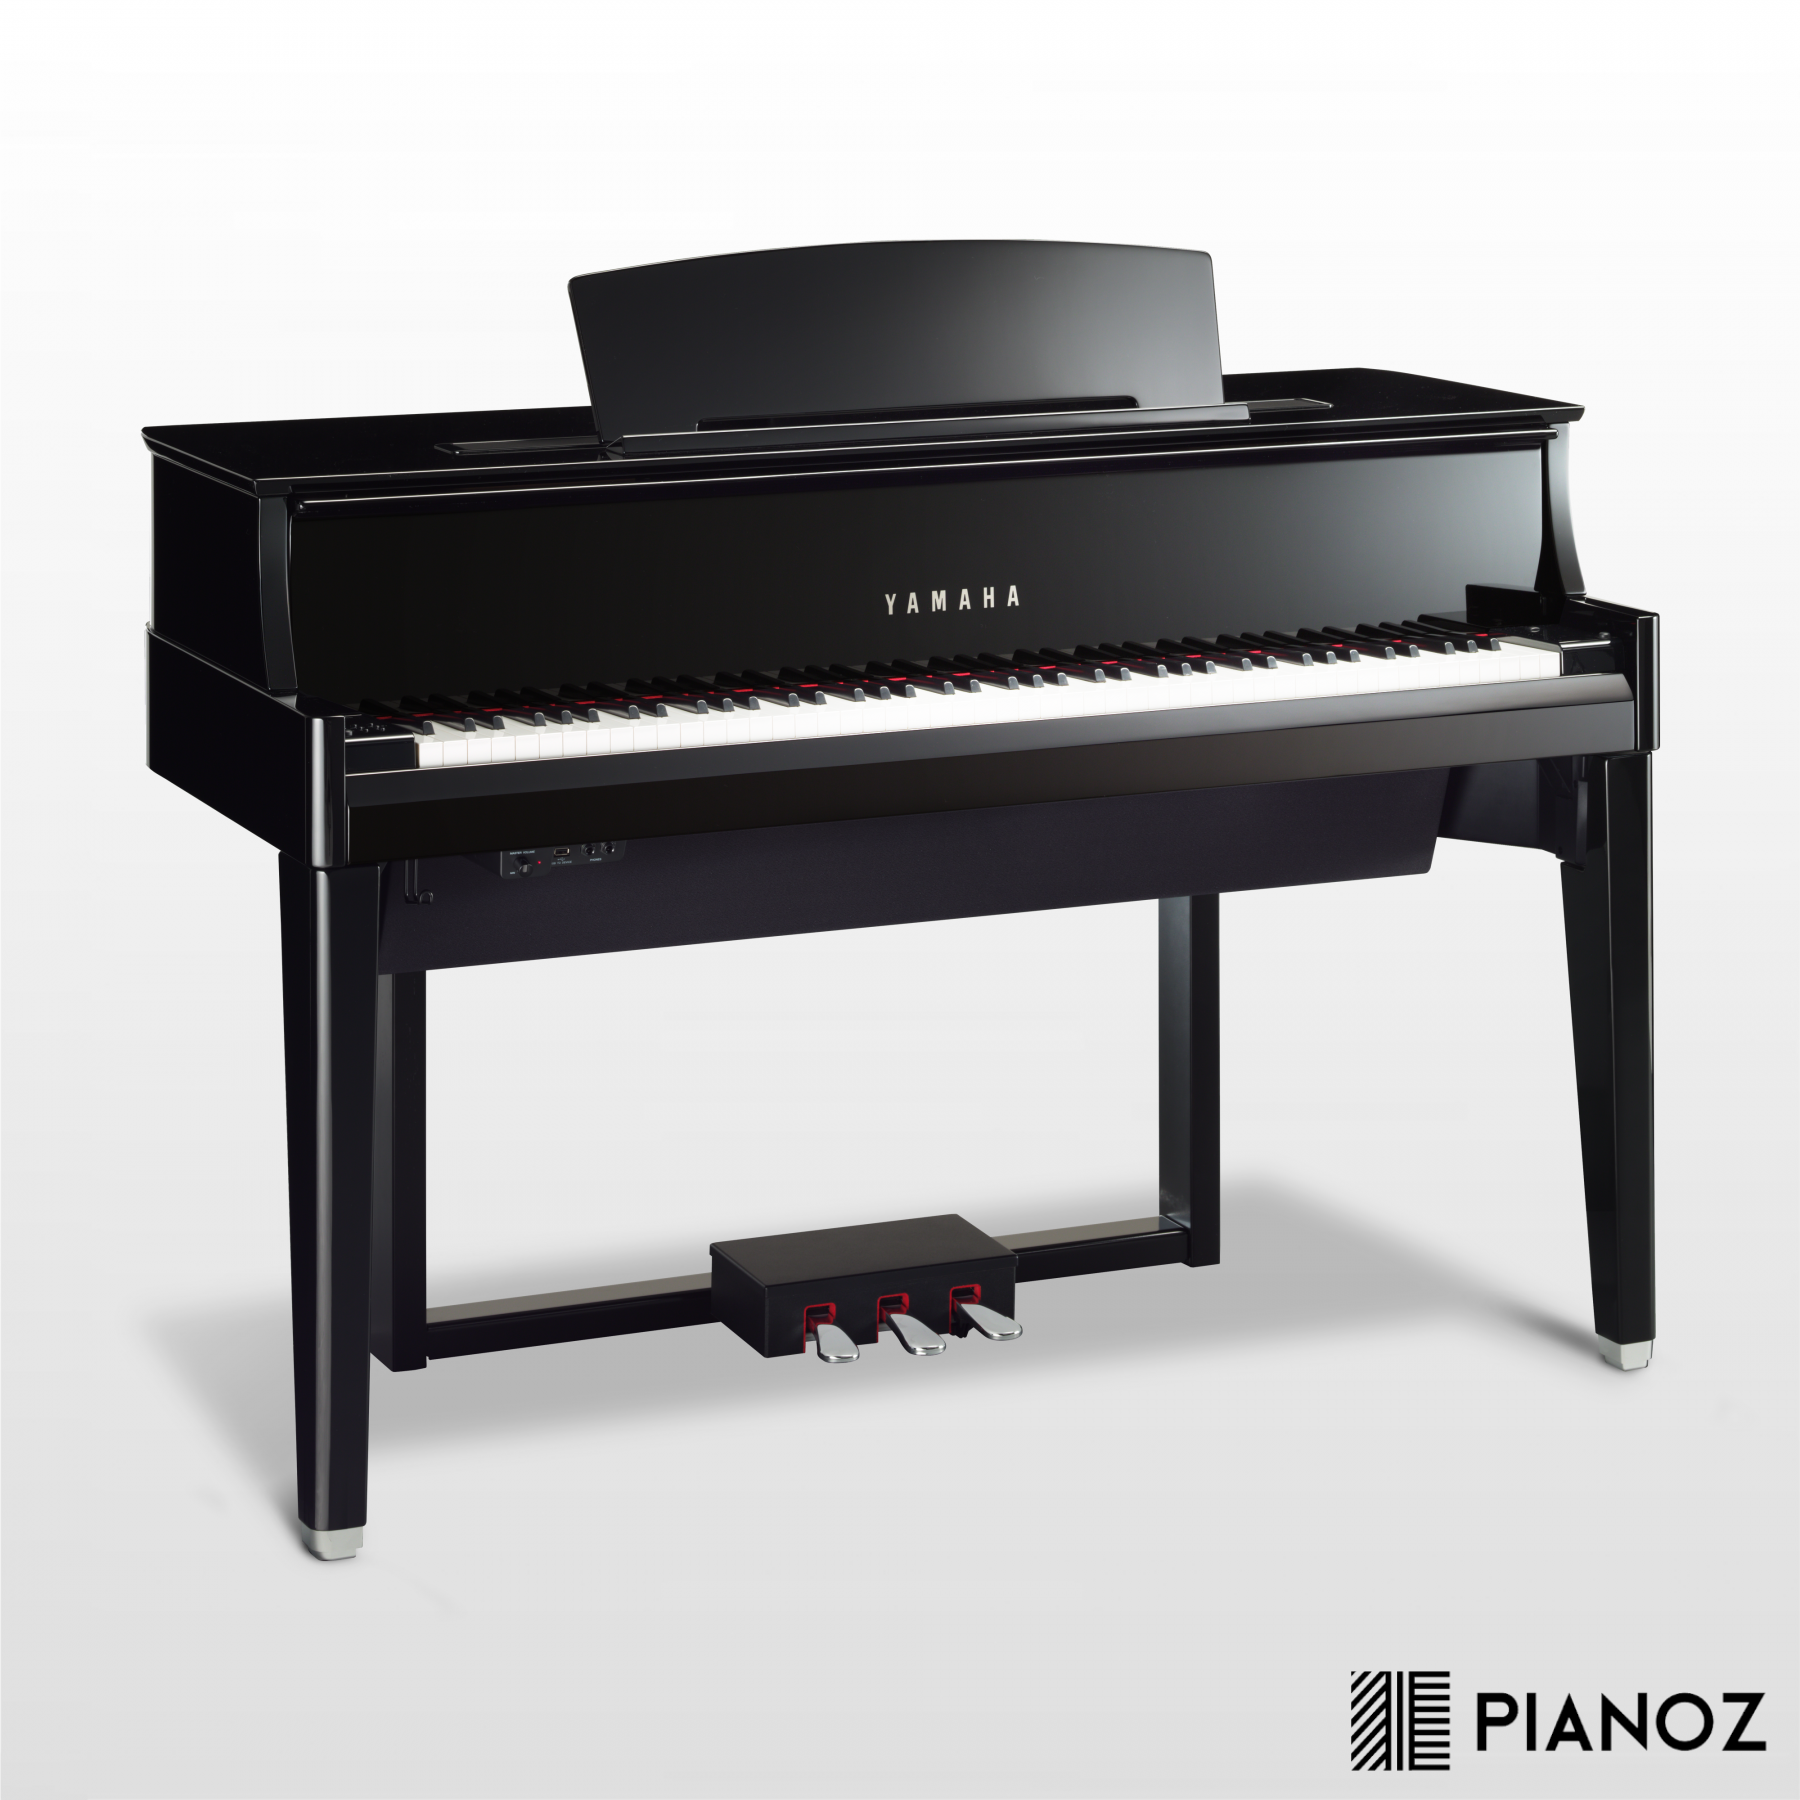 Yamaha N1X Avantgrand Digital Piano piano for sale in UK